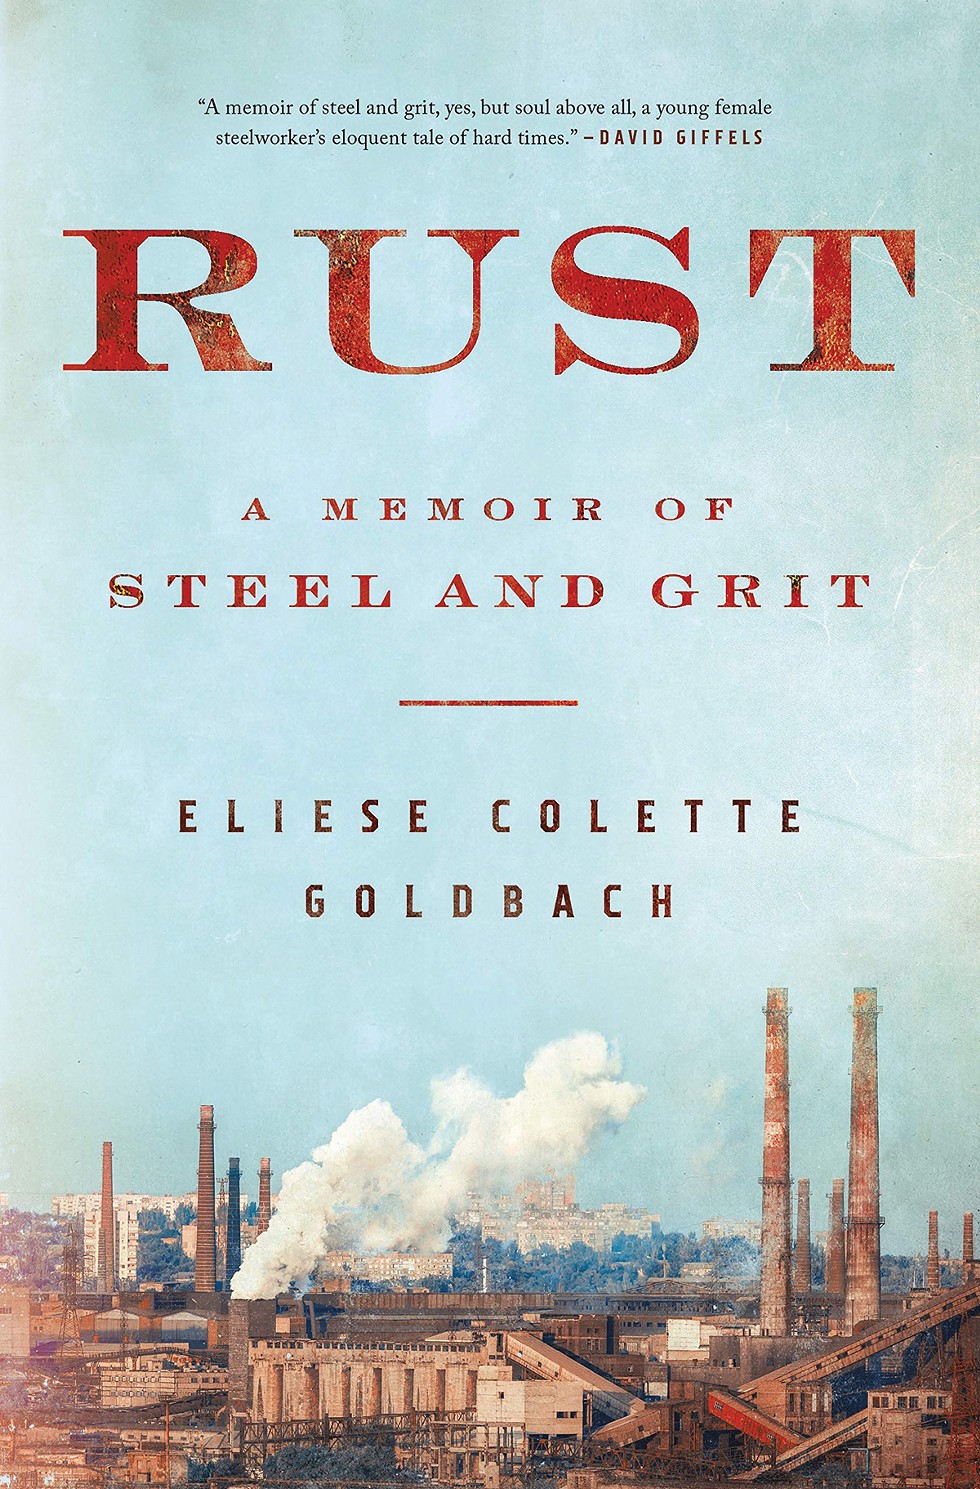 An Exerpt From 'Rust: A Memoir of Steel and Grit'